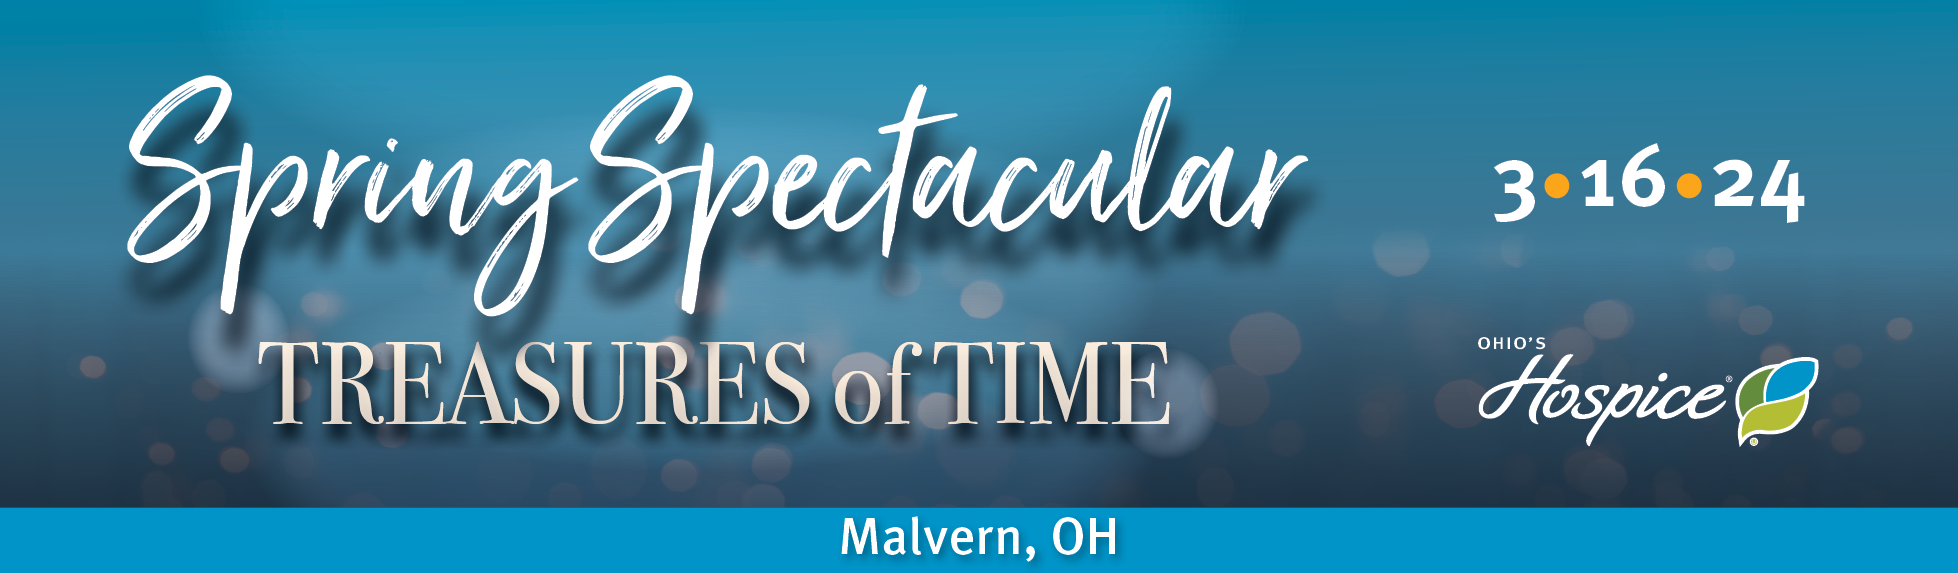 Ohio's Hospice Spring Spectacular Treasures of Time 3.16.24 New Philadelphia, OH